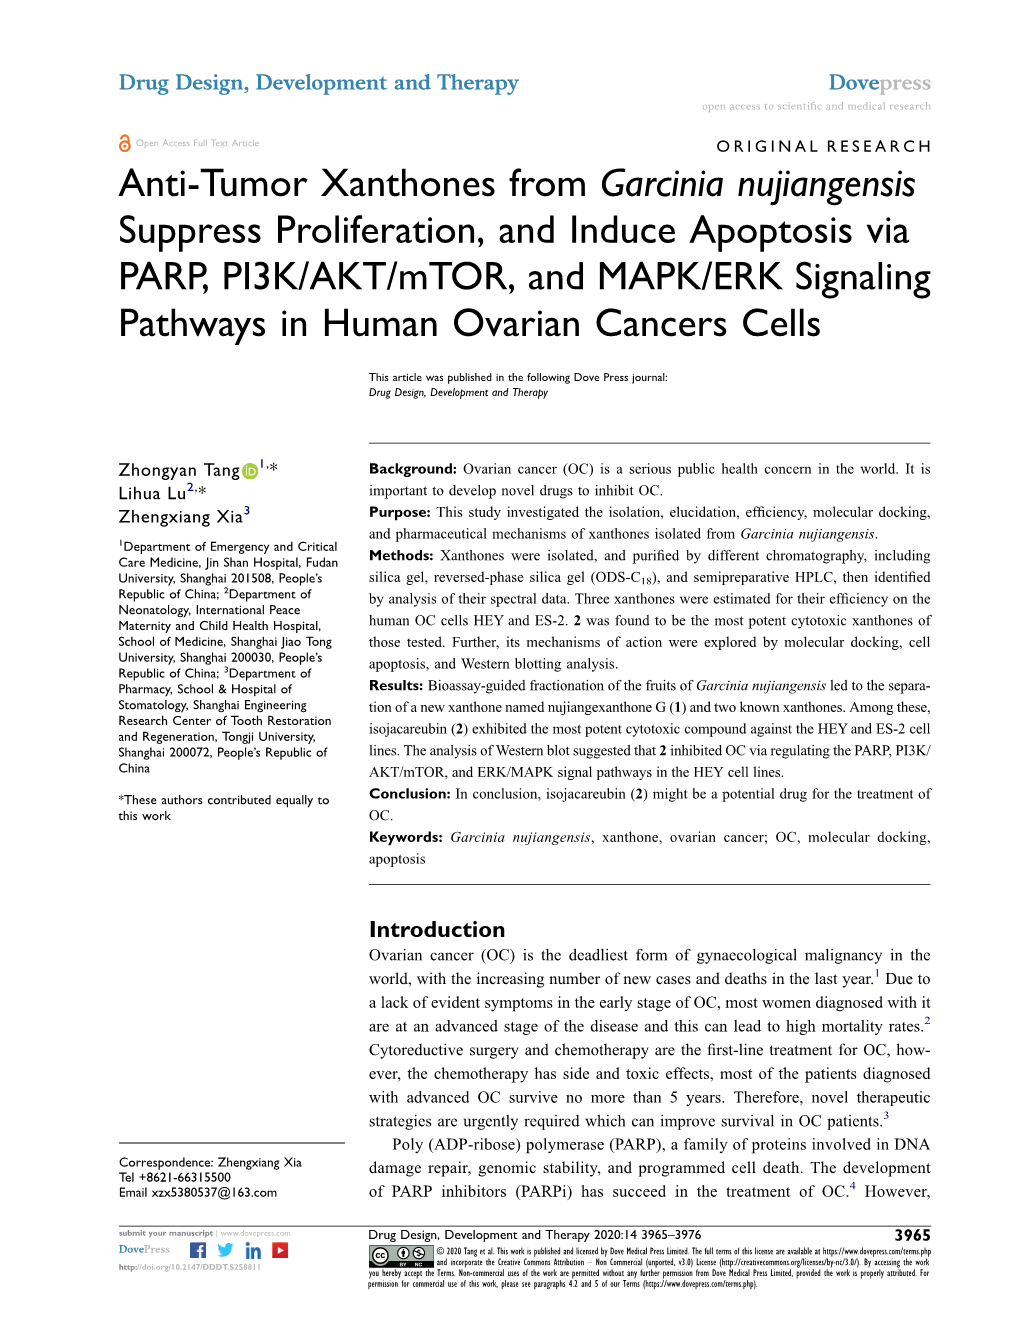 Anti-Tumor Xanthones from Garcinia Nujiangensis Suppress Proliferation, and Induce Apoptosis Via PARP, PI3K/AKT/Mtor, and MAPK/E